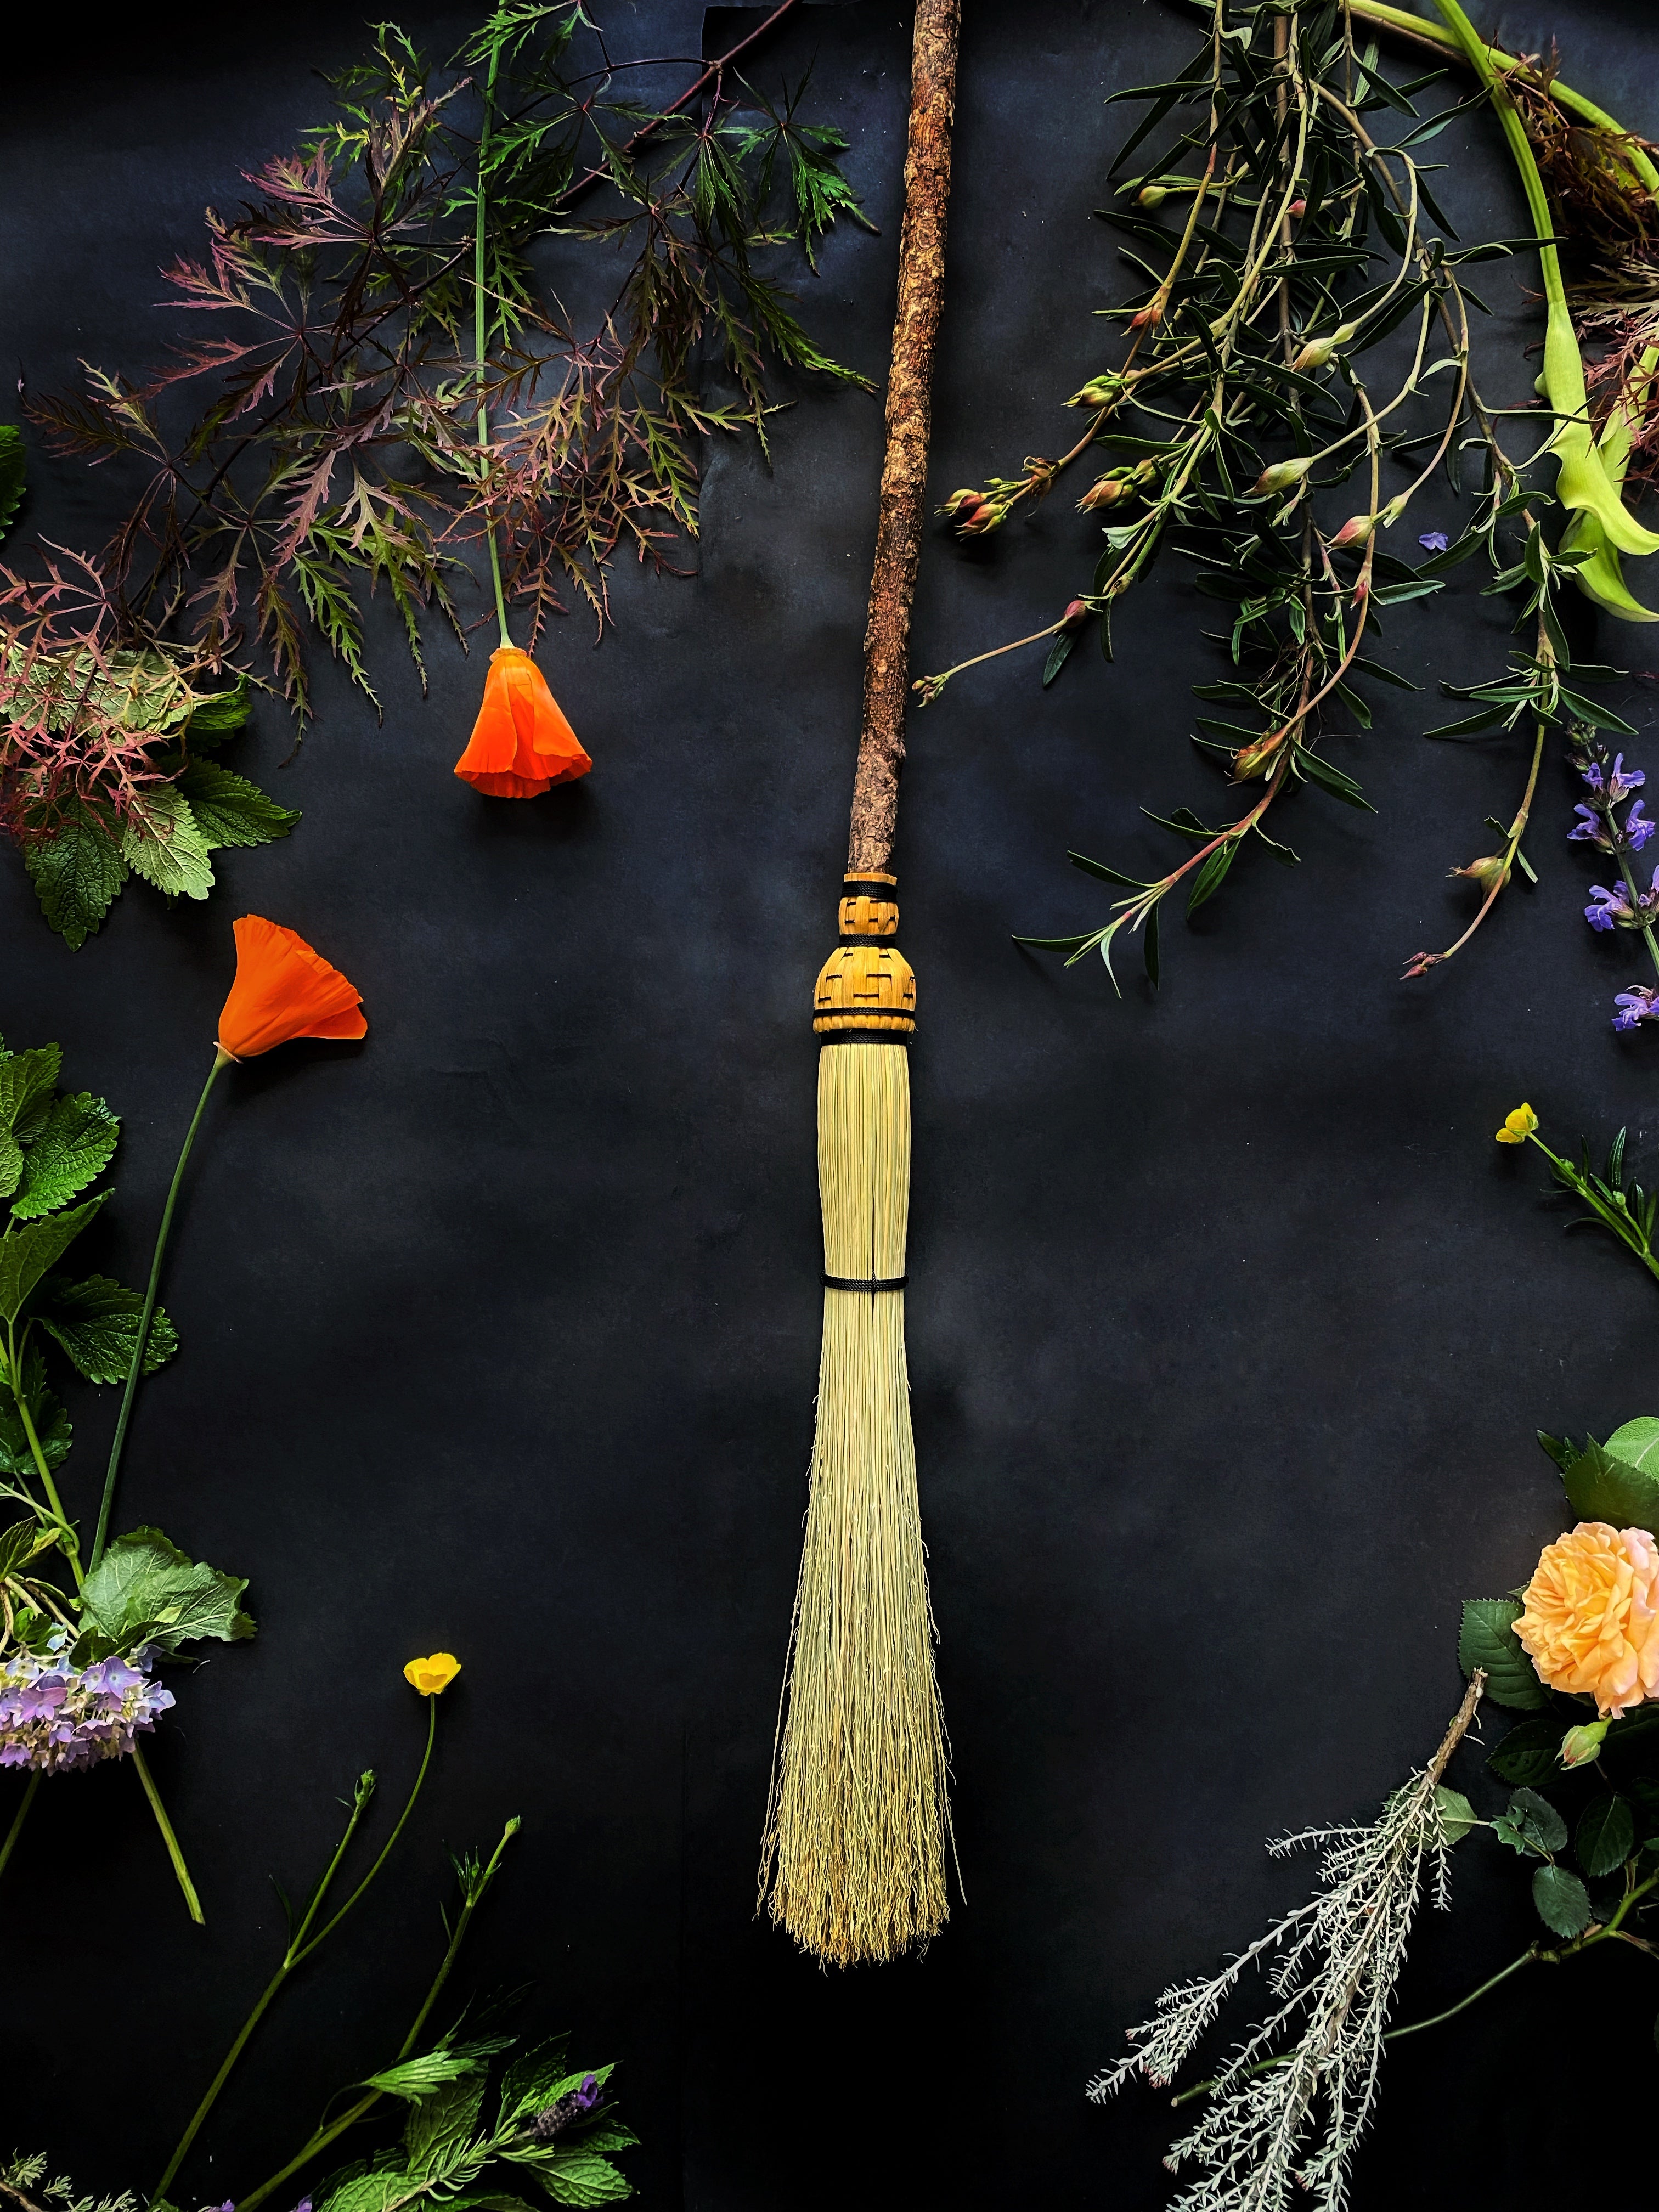 Cobwebber Brooms w/ Woven Top